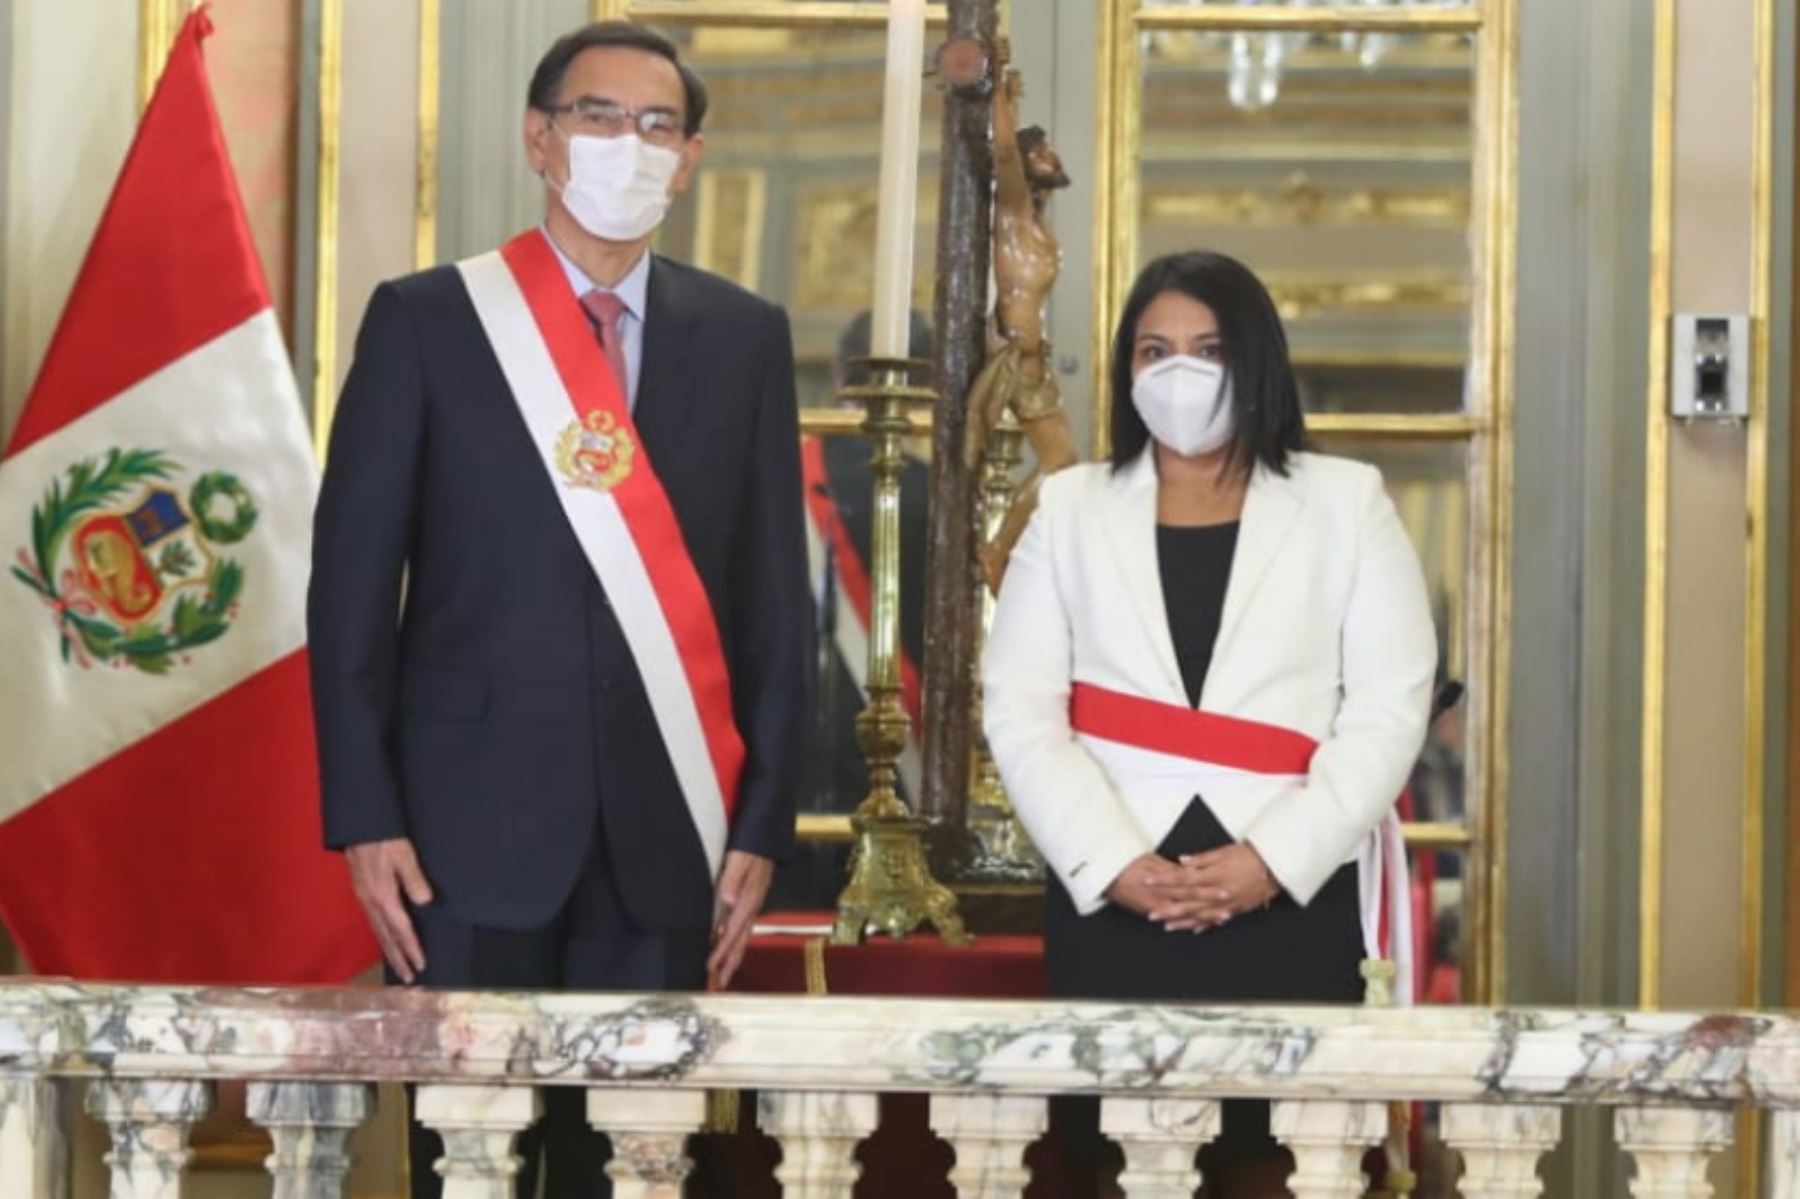 El presidente de la República, Martín Vizcarra, toma juramento a Ana Neyra como ministra de Justicia.

Foto: ANDINA/ Prensa Presidencia